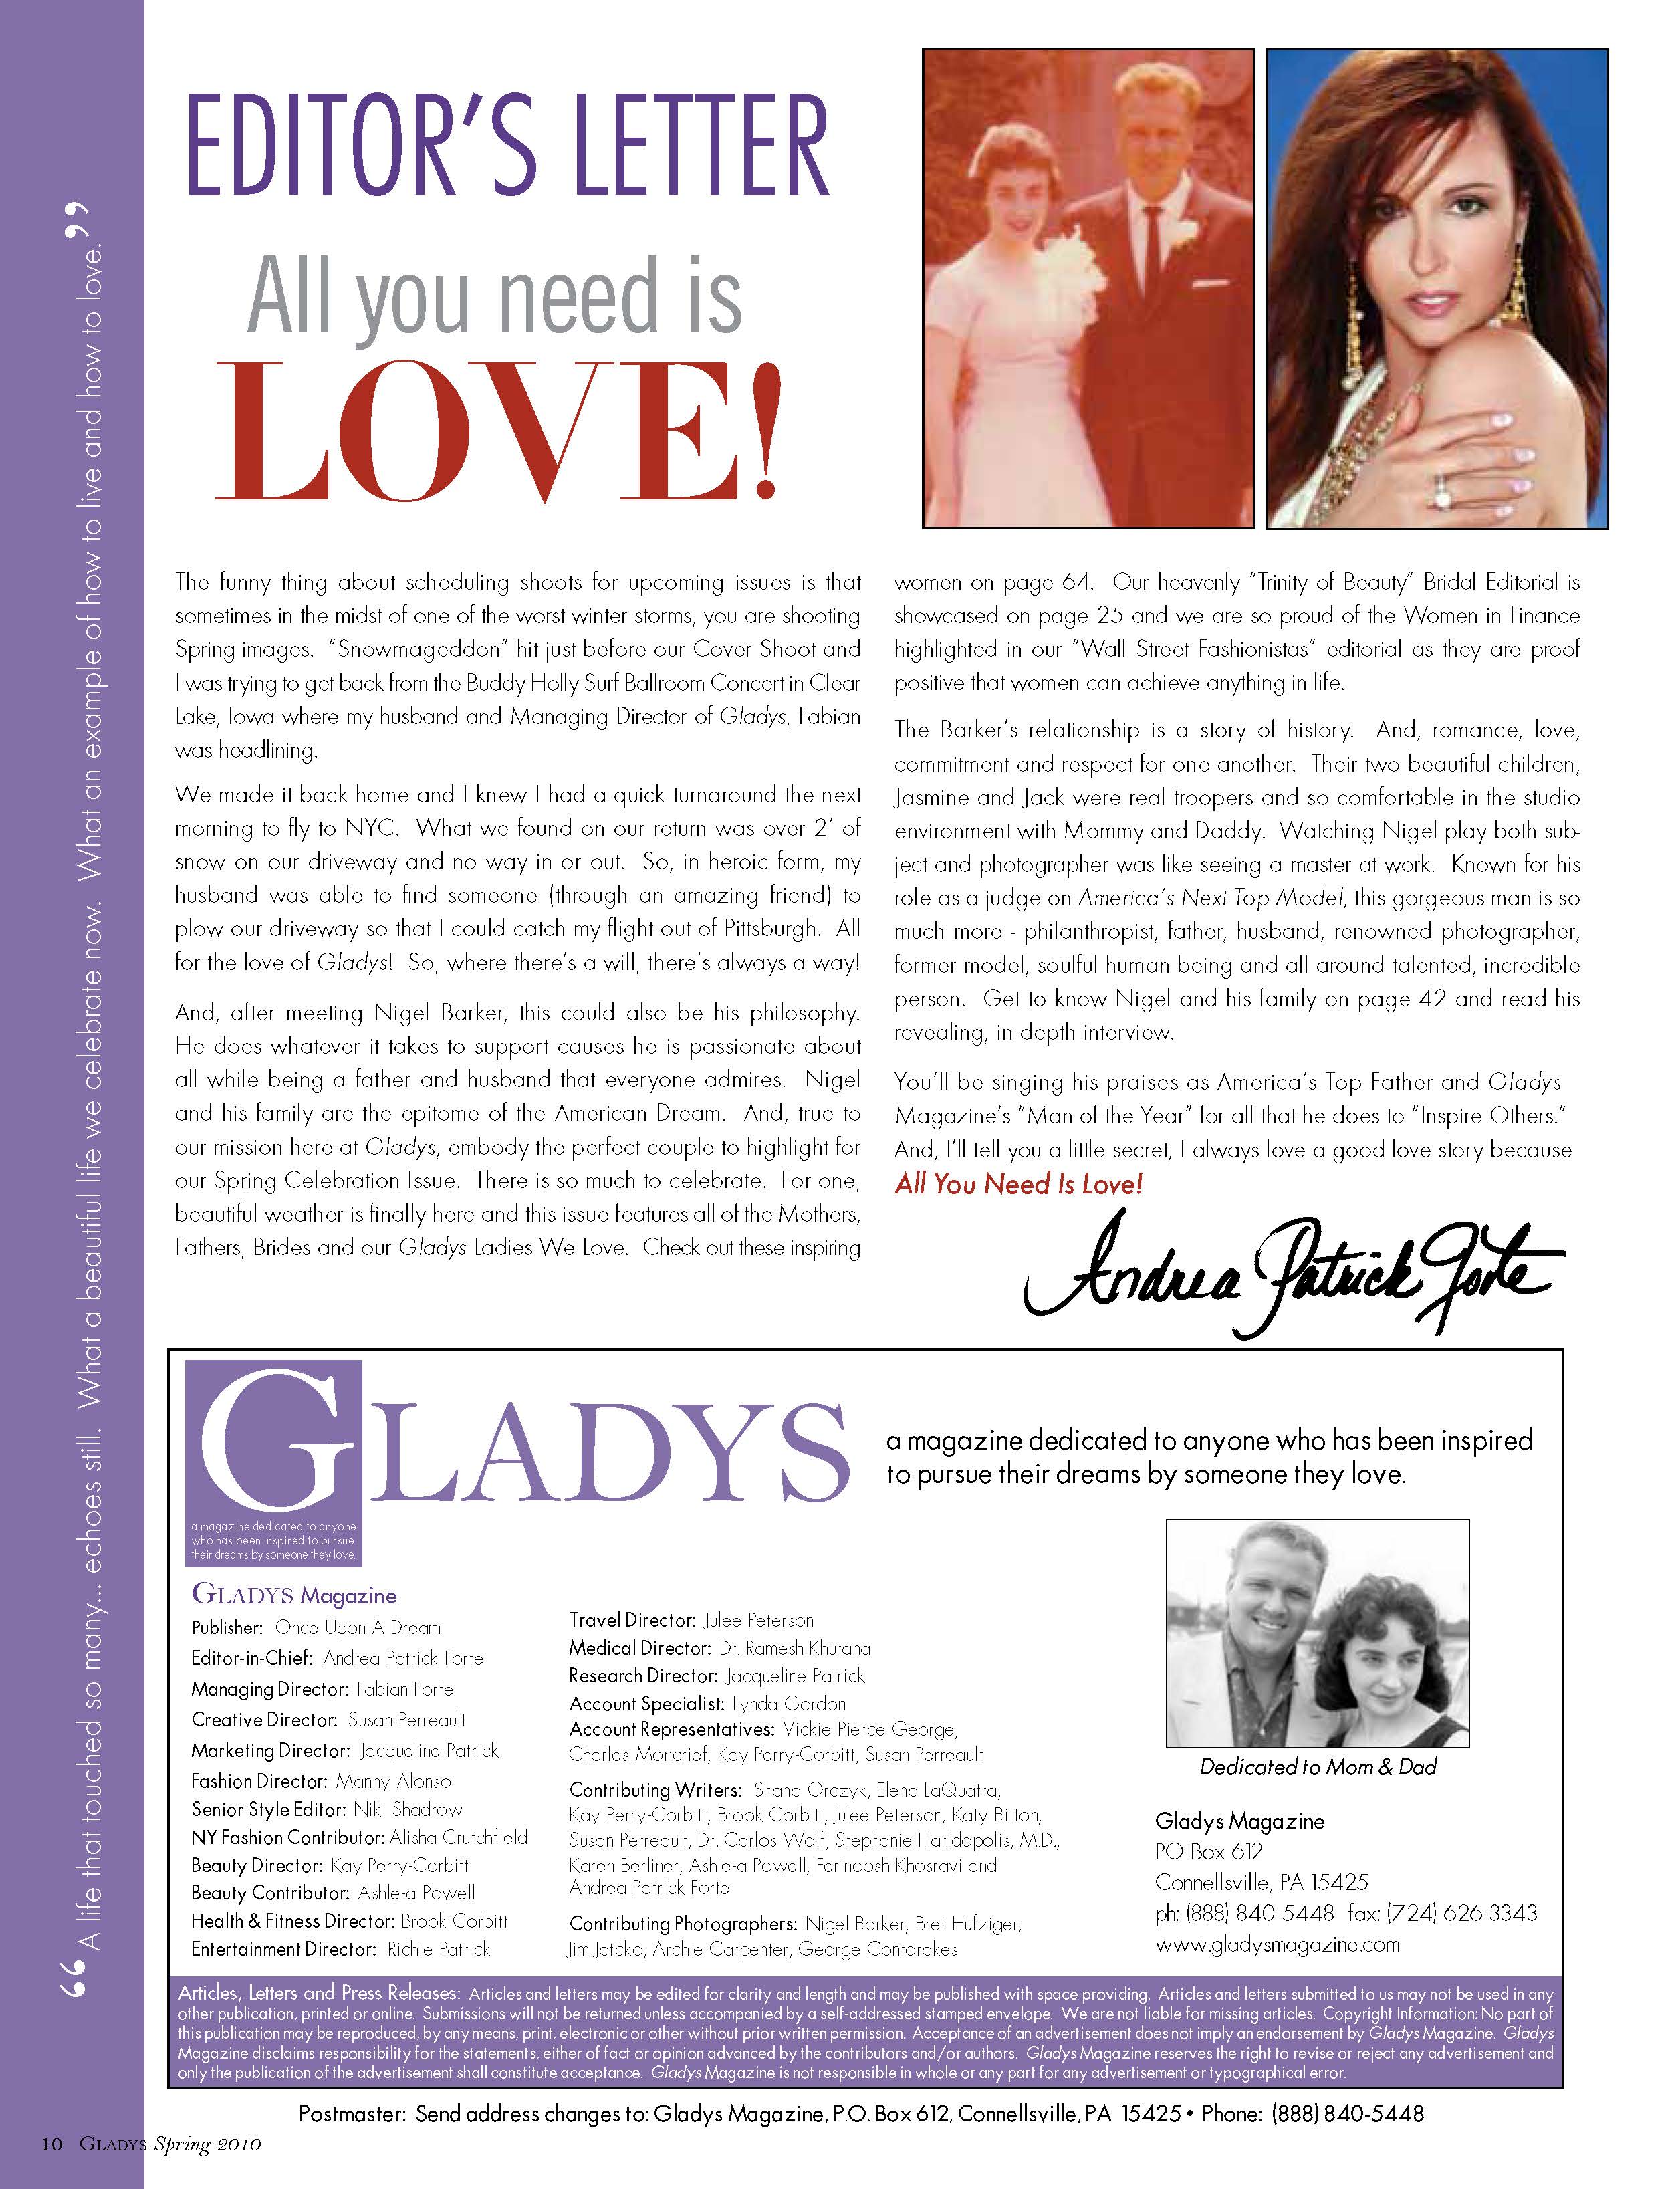 spring-2010-editor-s-letter-gladys-magazine